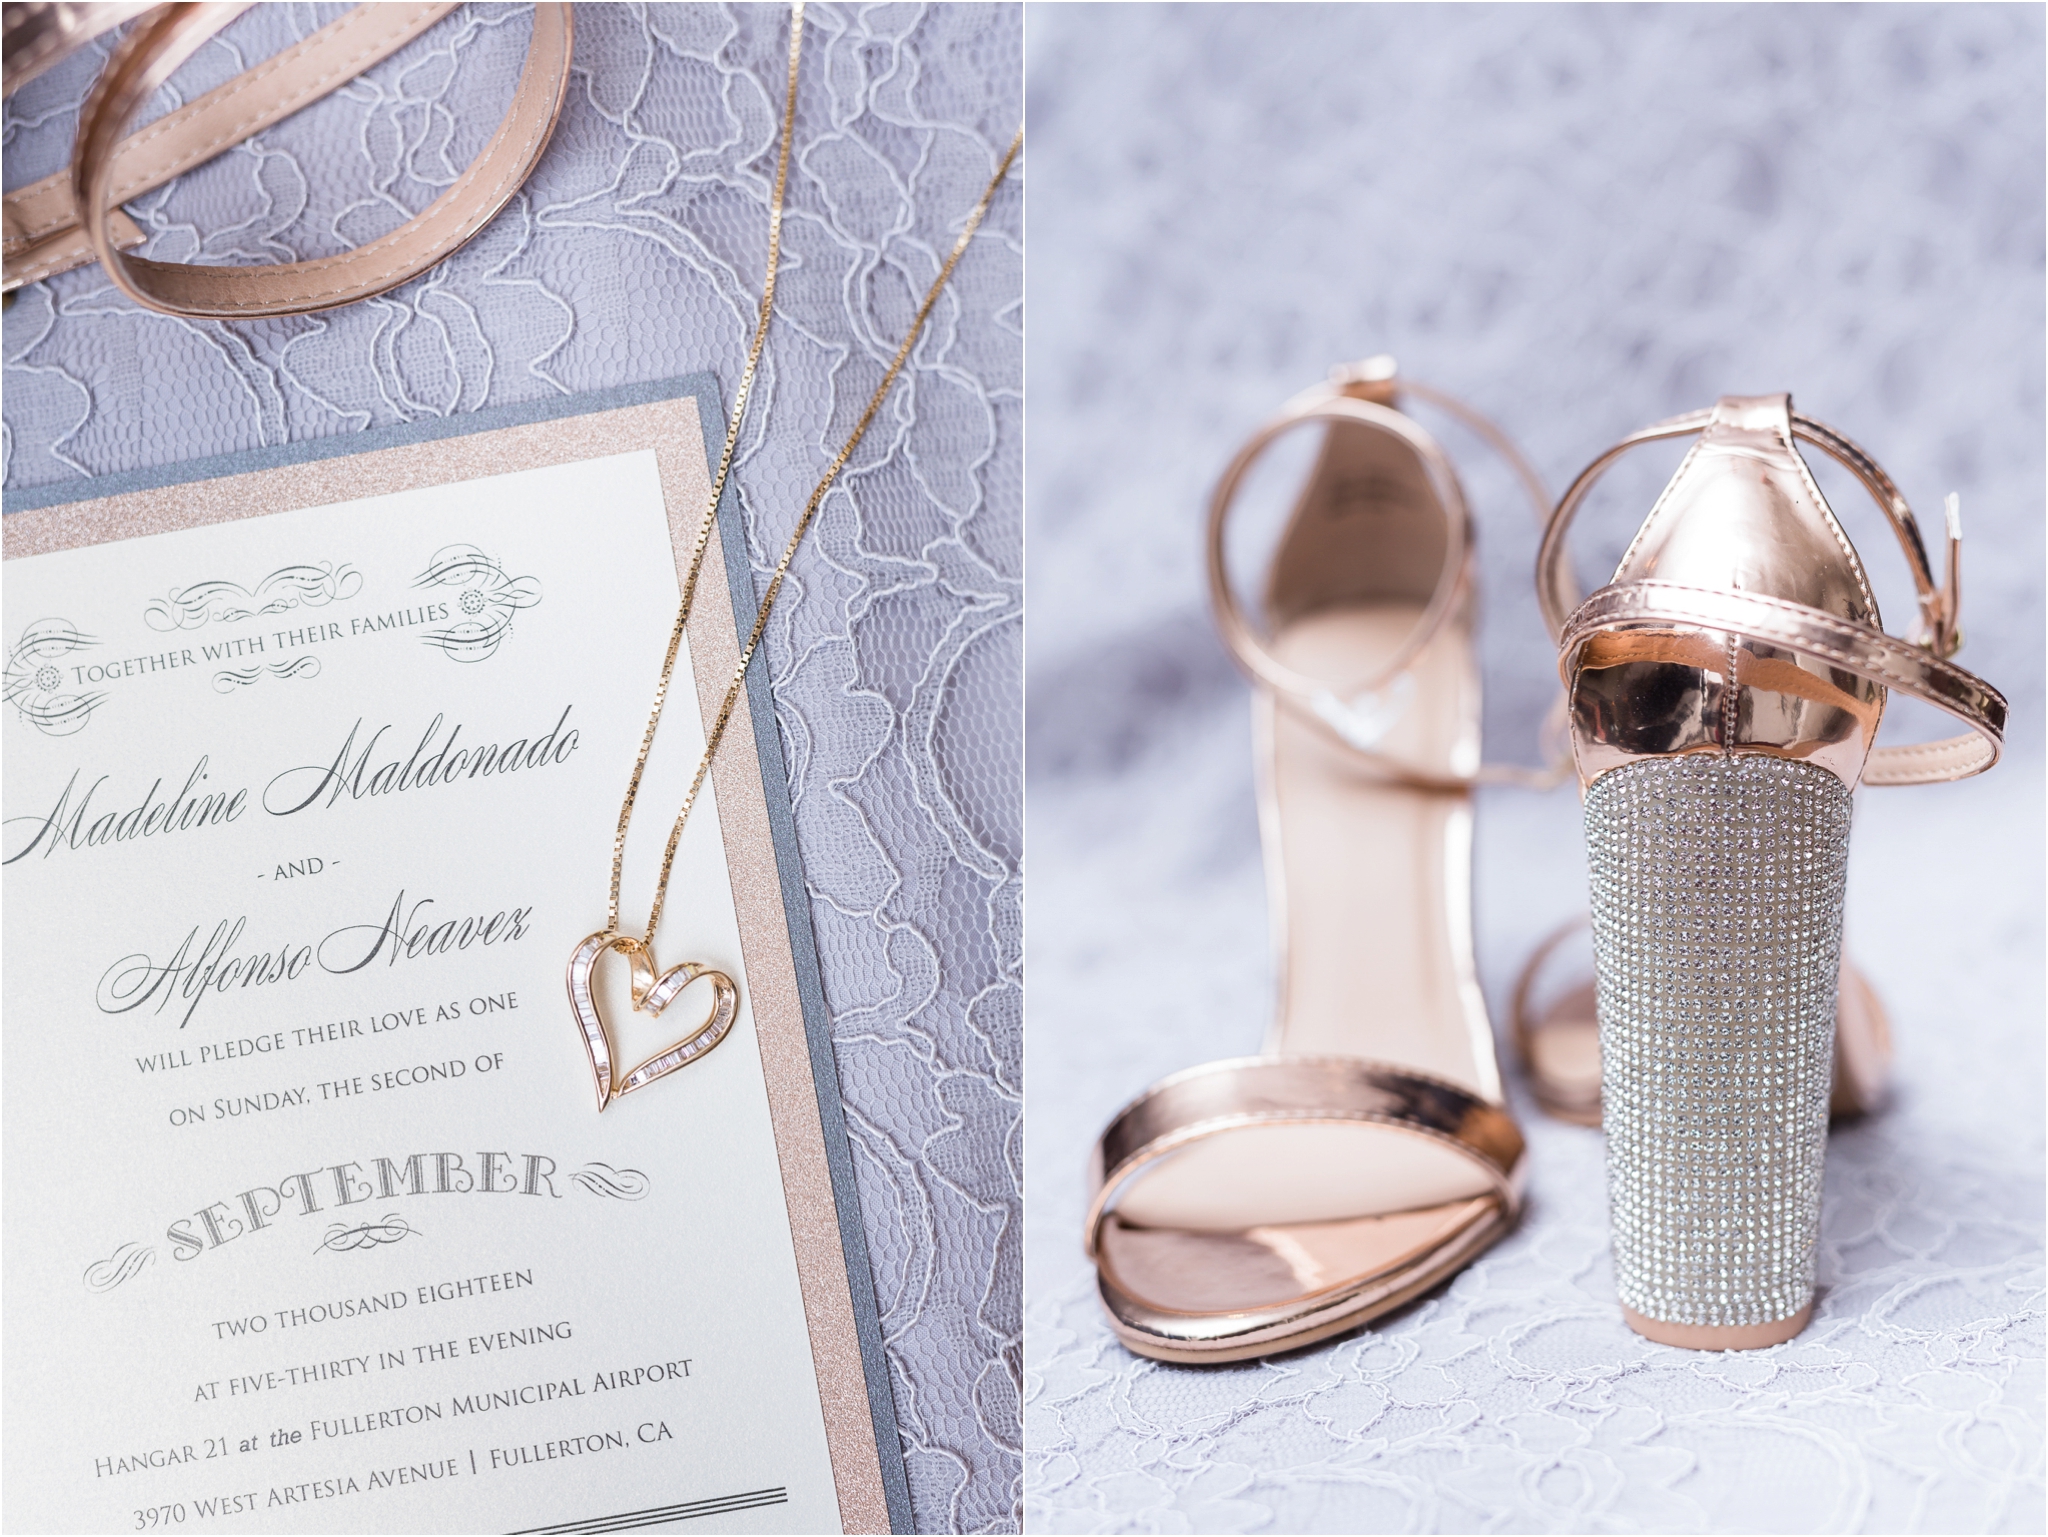 Wedding invitation and bridal shoes